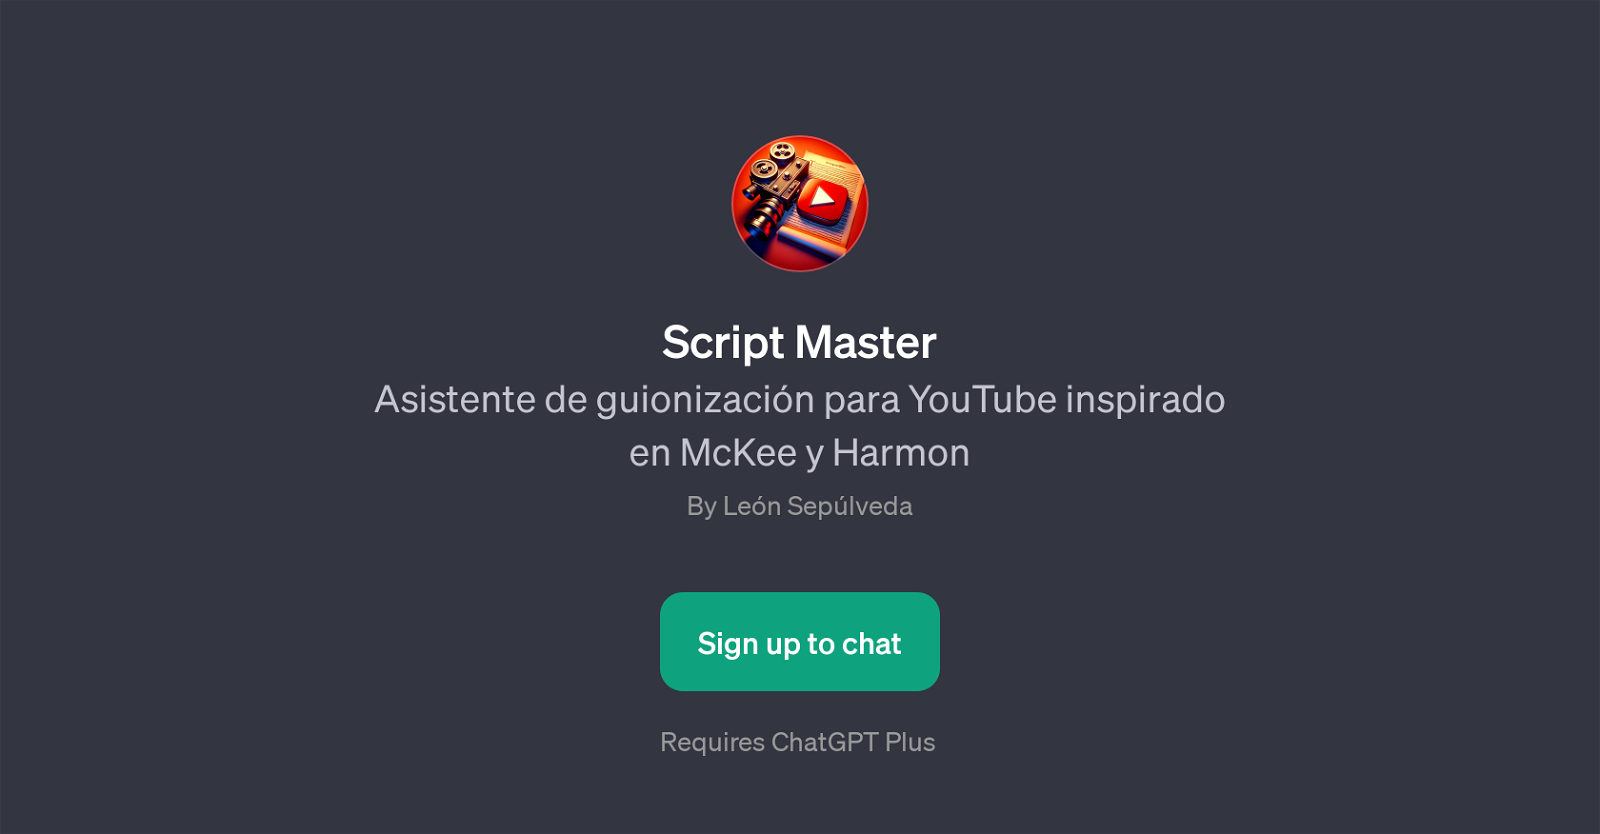 Script Master website